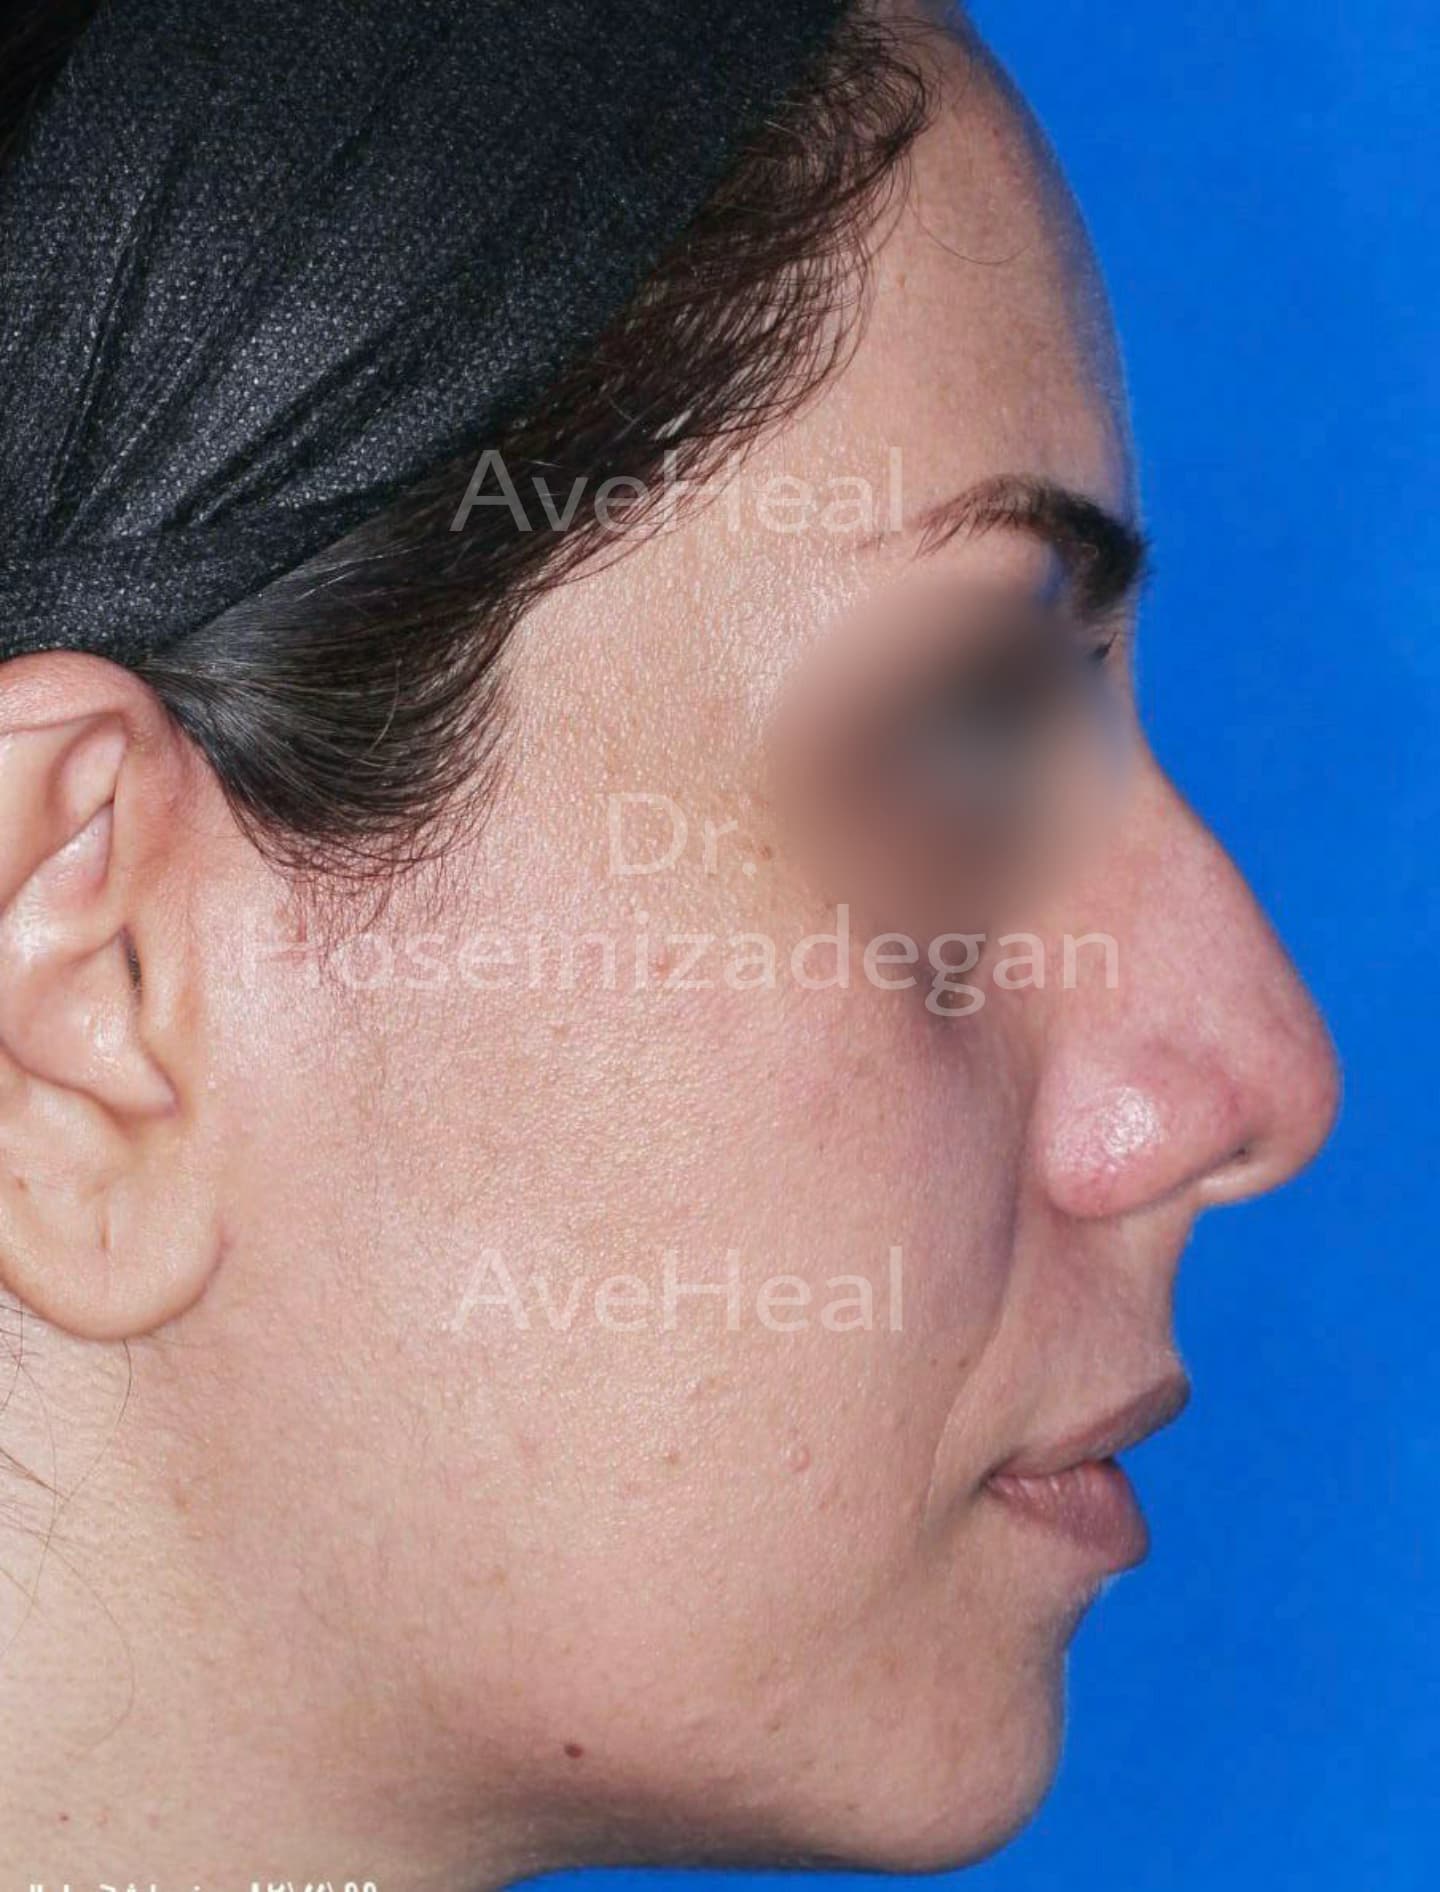 before-rhinoplasty-dr-fatemeh-hoseini-zadegan-shirazi